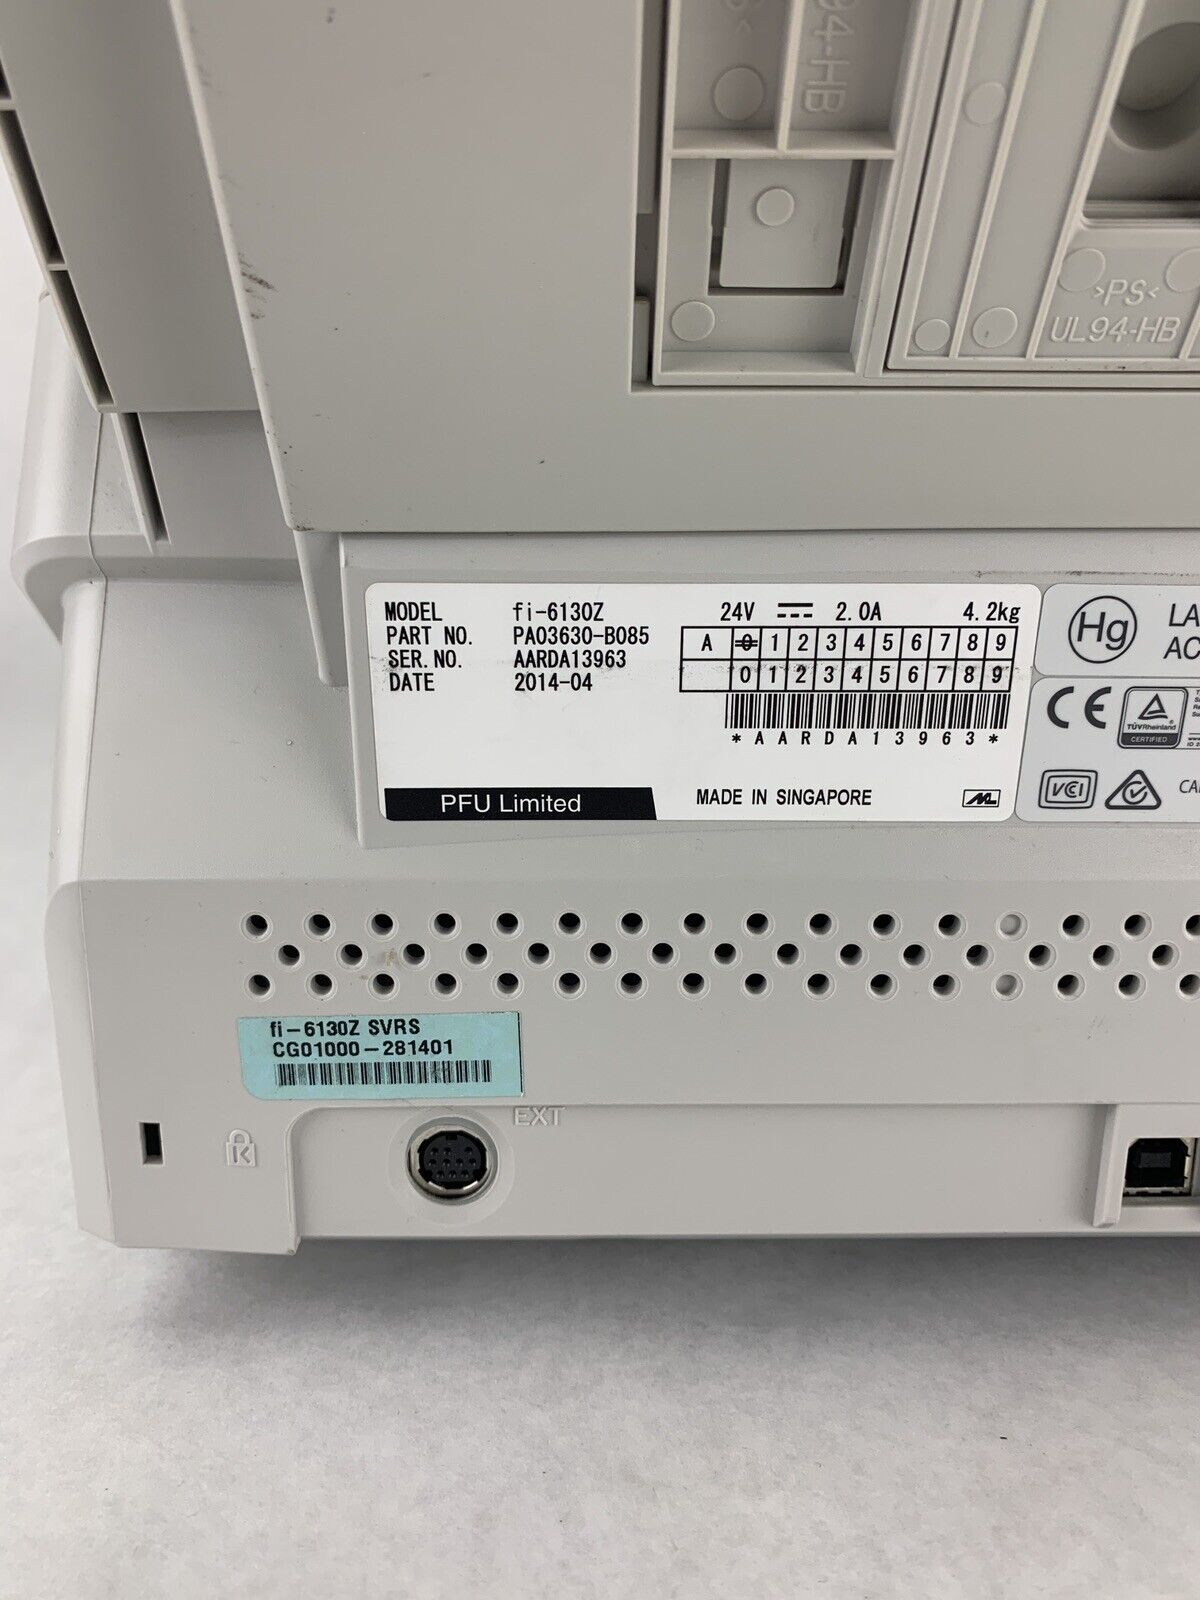 Fujitsu fi-6130z Duplex Color Sheet-Fed Document Scanner Tested W/ Paper Guide